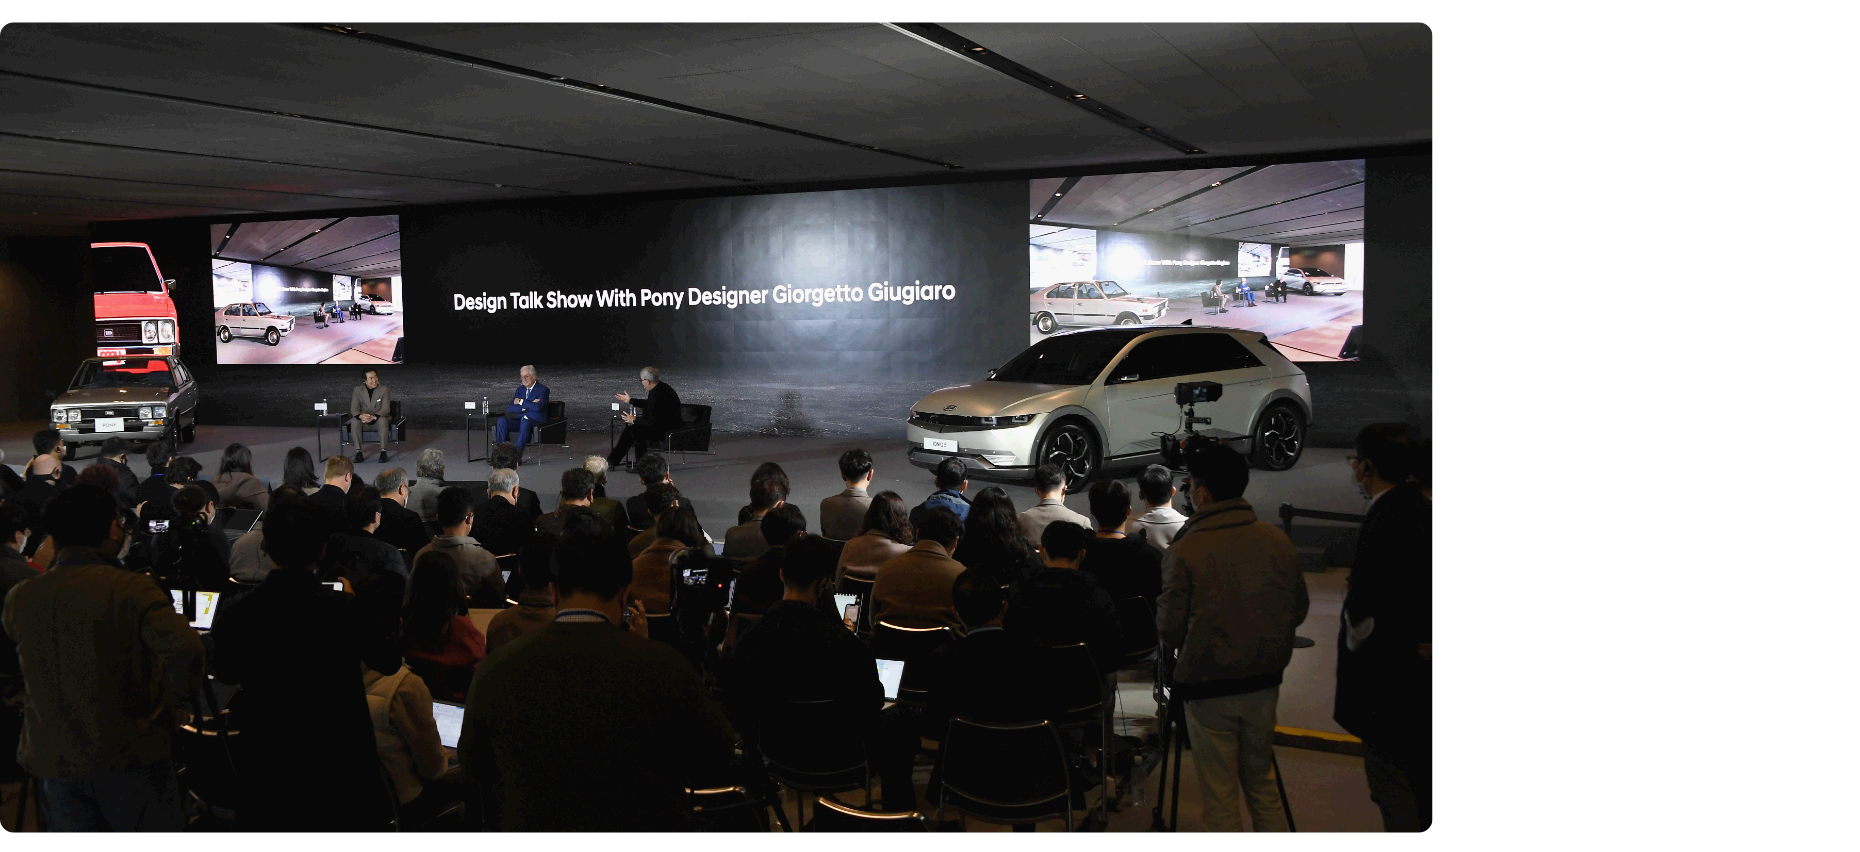 The Giugiaro Design Talk Show held at the Hyundai Motor Company Human Resources Development Center